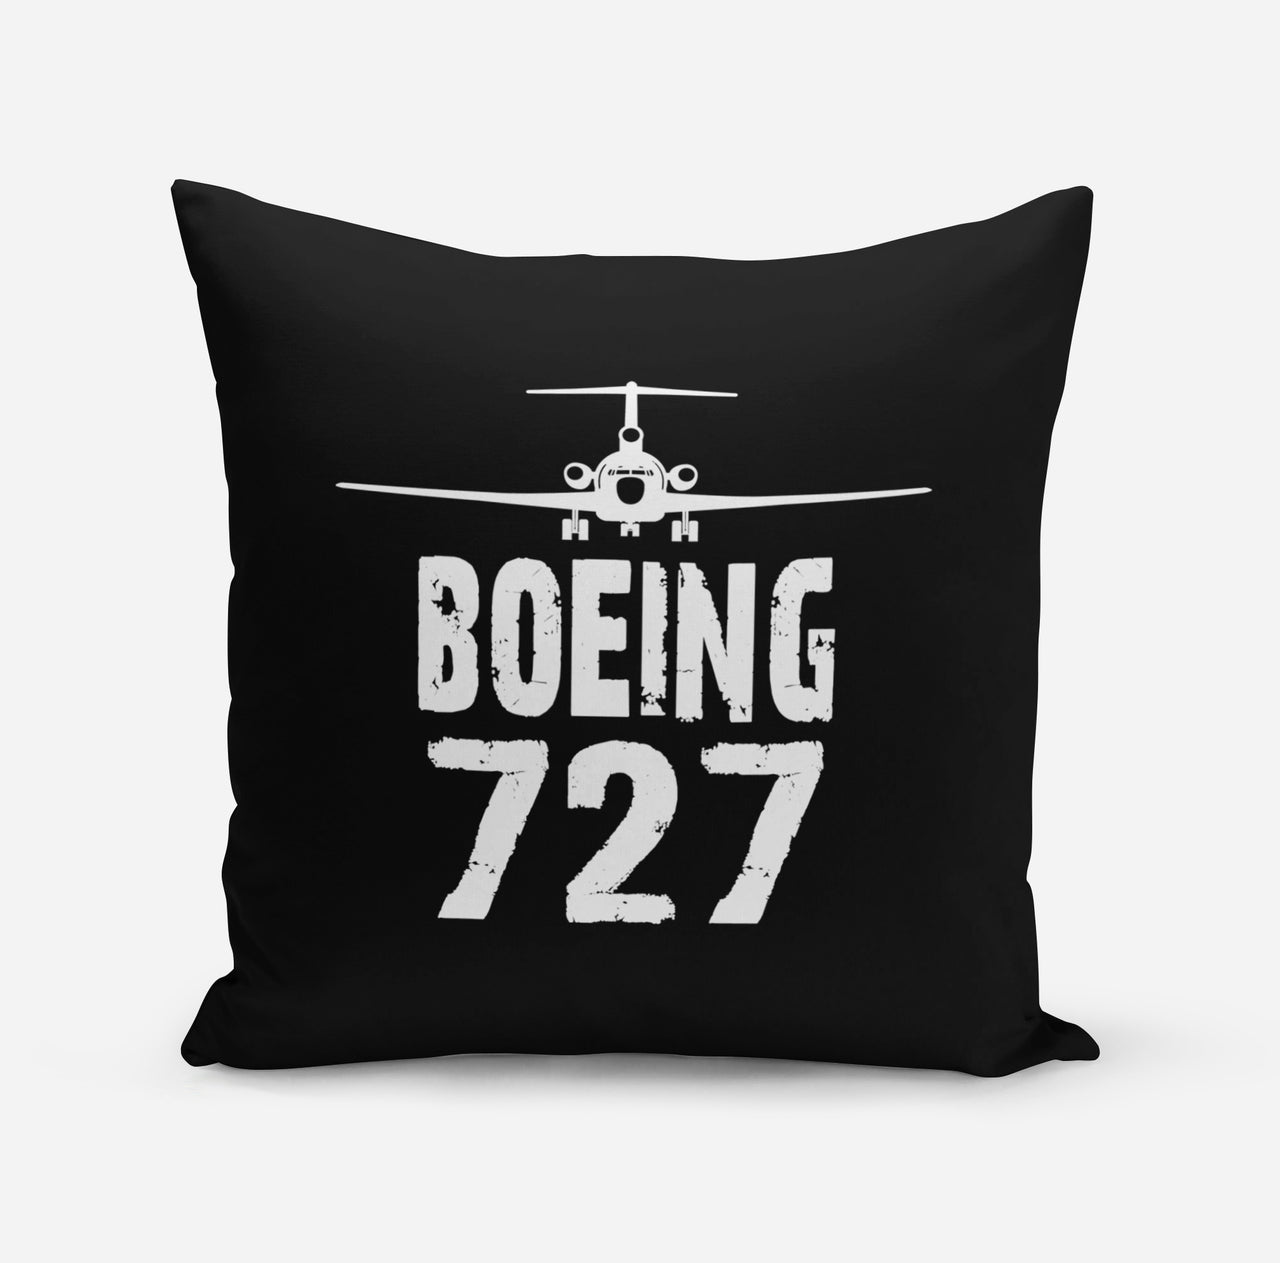 Boeing 727 & Plane Designed Pillows